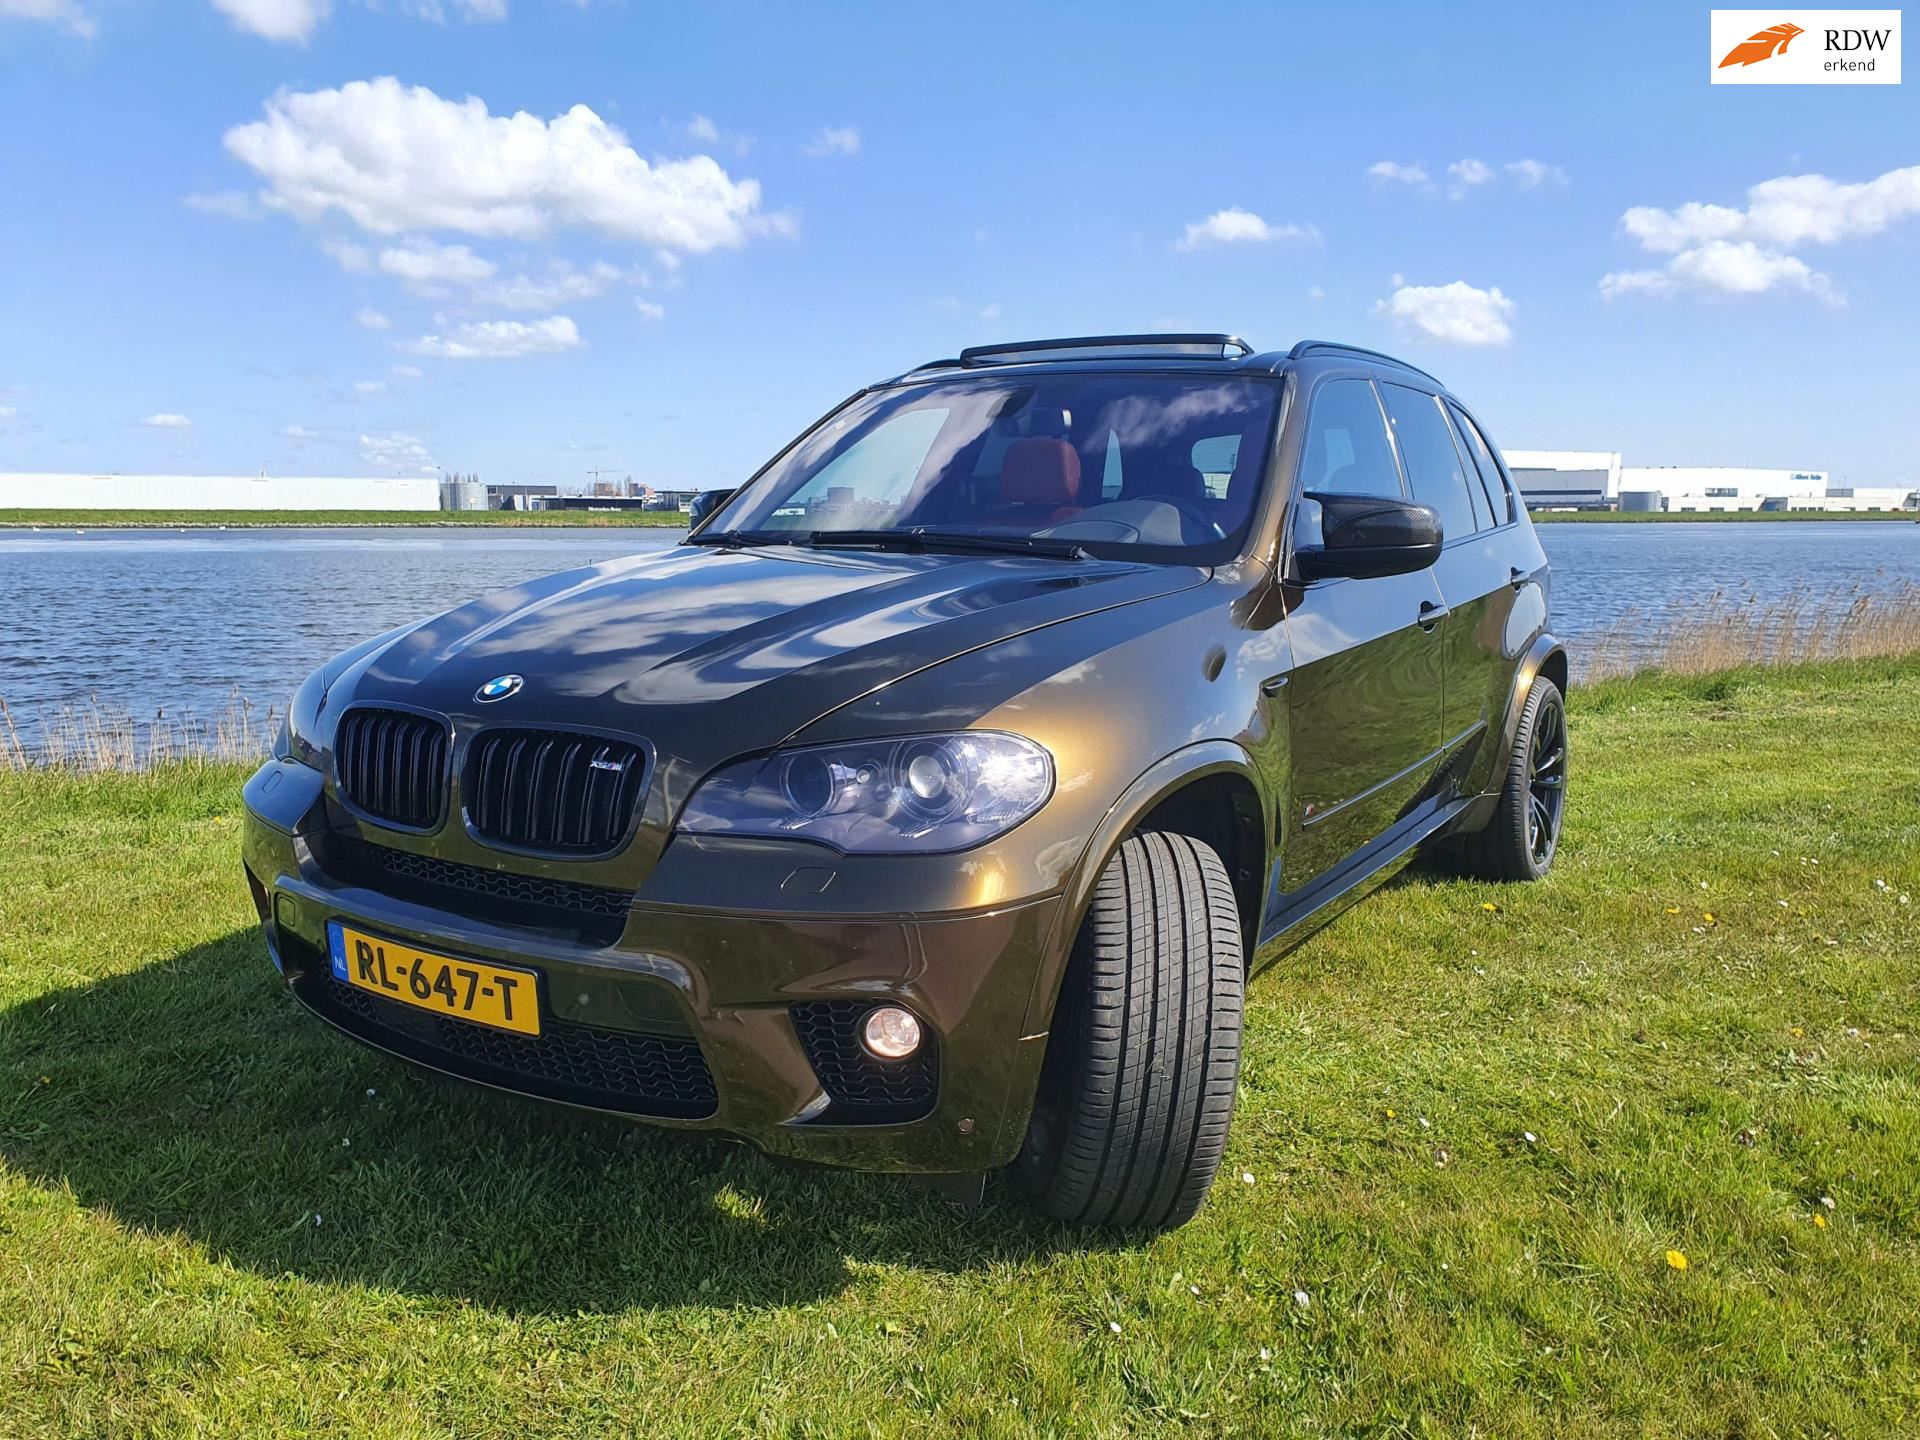 BMW X5 occasion - Westpoort Cars